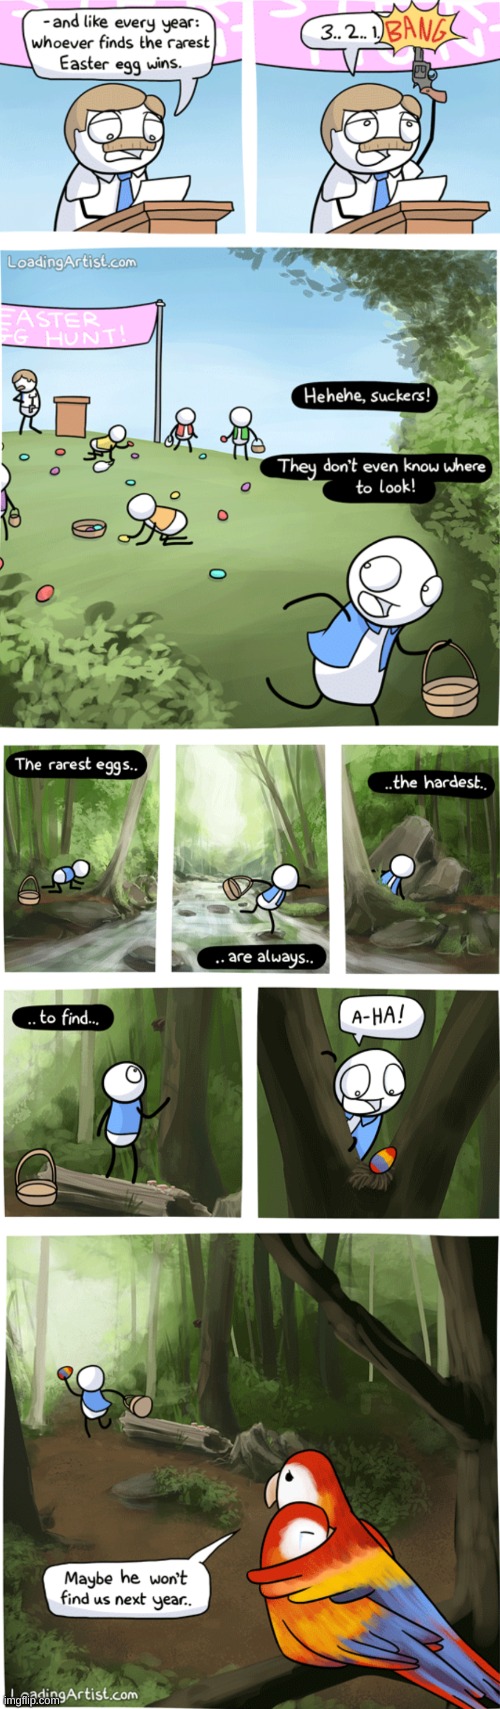 The rarest egg | image tagged in egg hunt,loading artist,comics | made w/ Imgflip meme maker